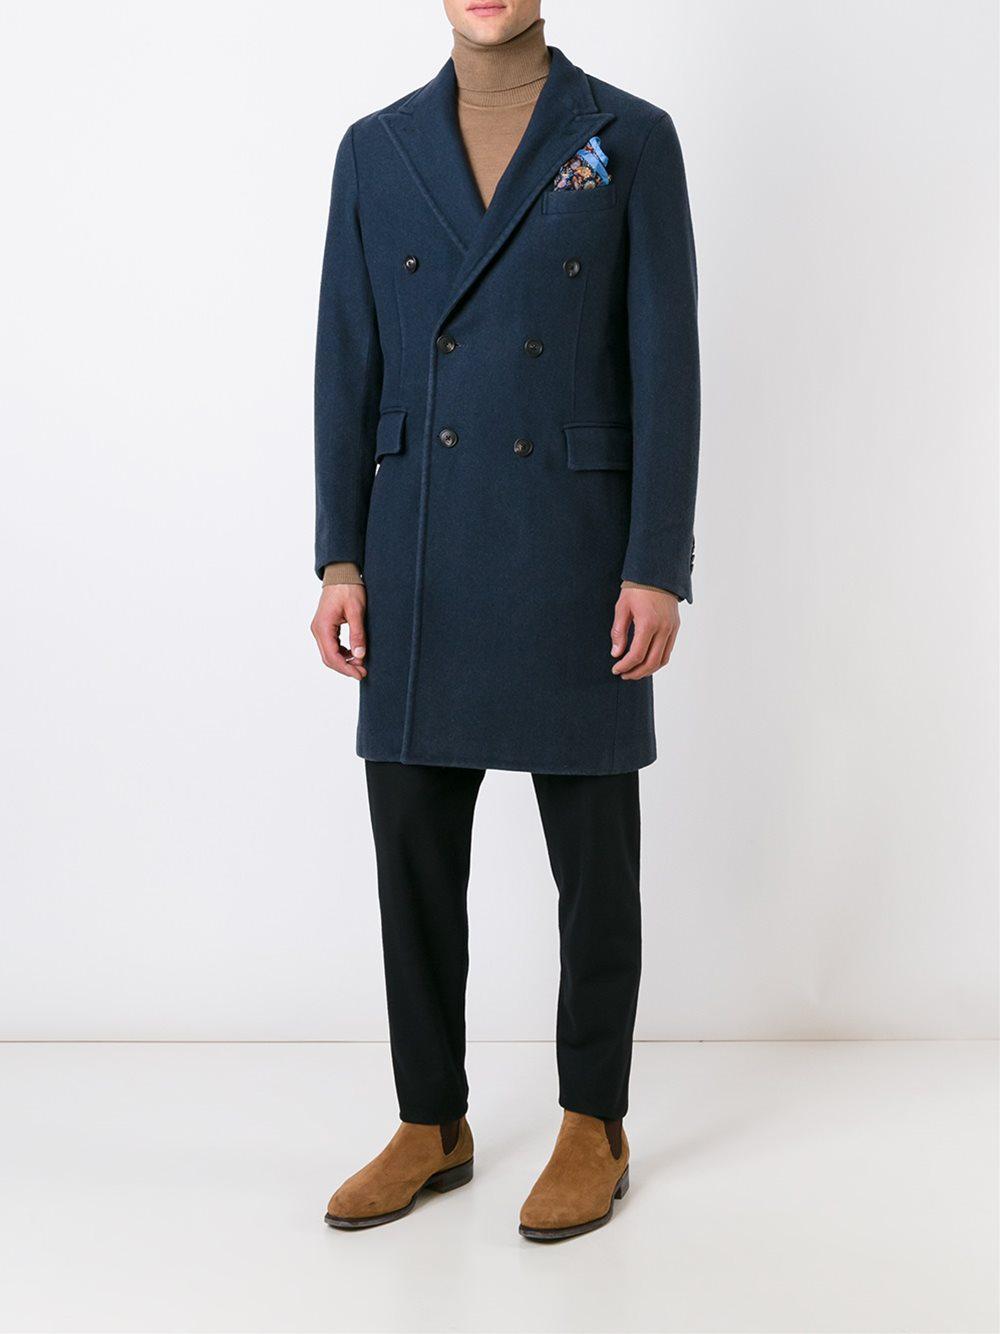 Lyst - Boglioli Long Pea Coat in Blue for Men